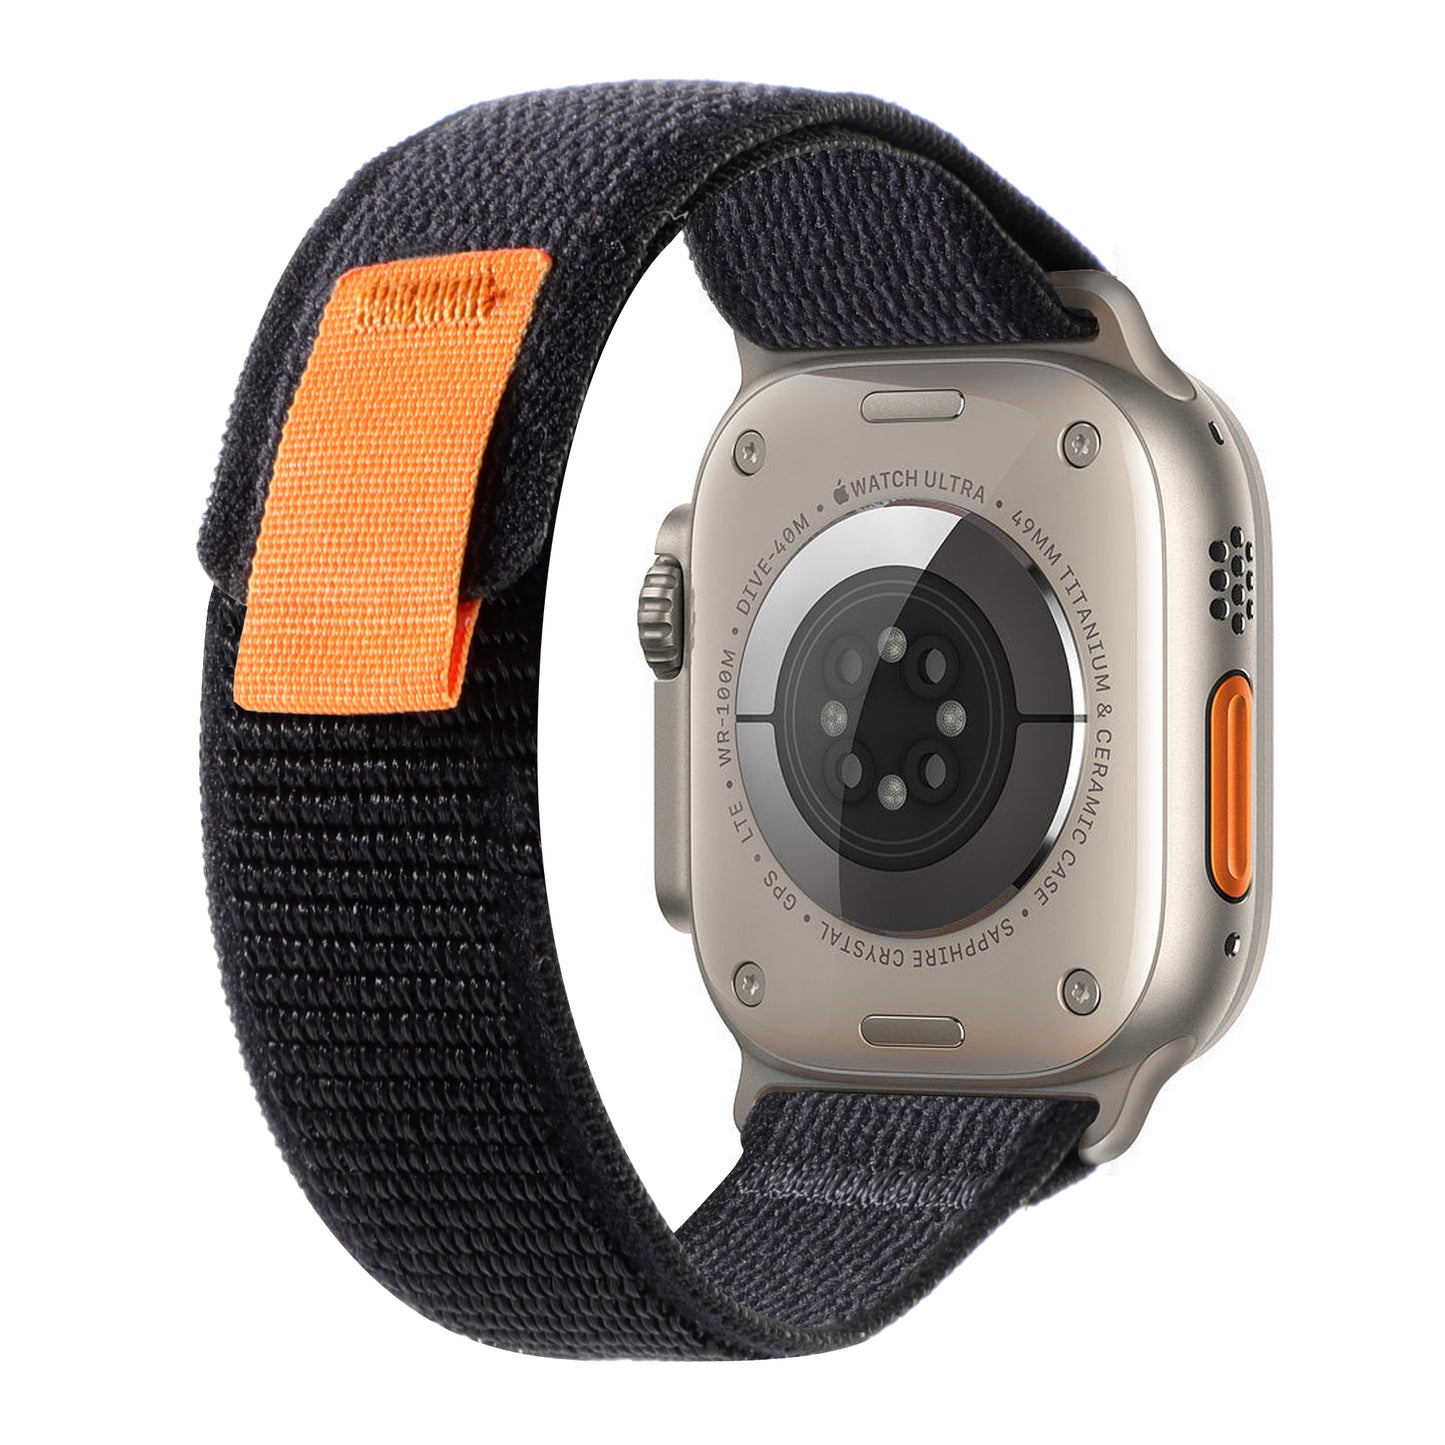 arktisband Apple Watch Trail Loop Armband